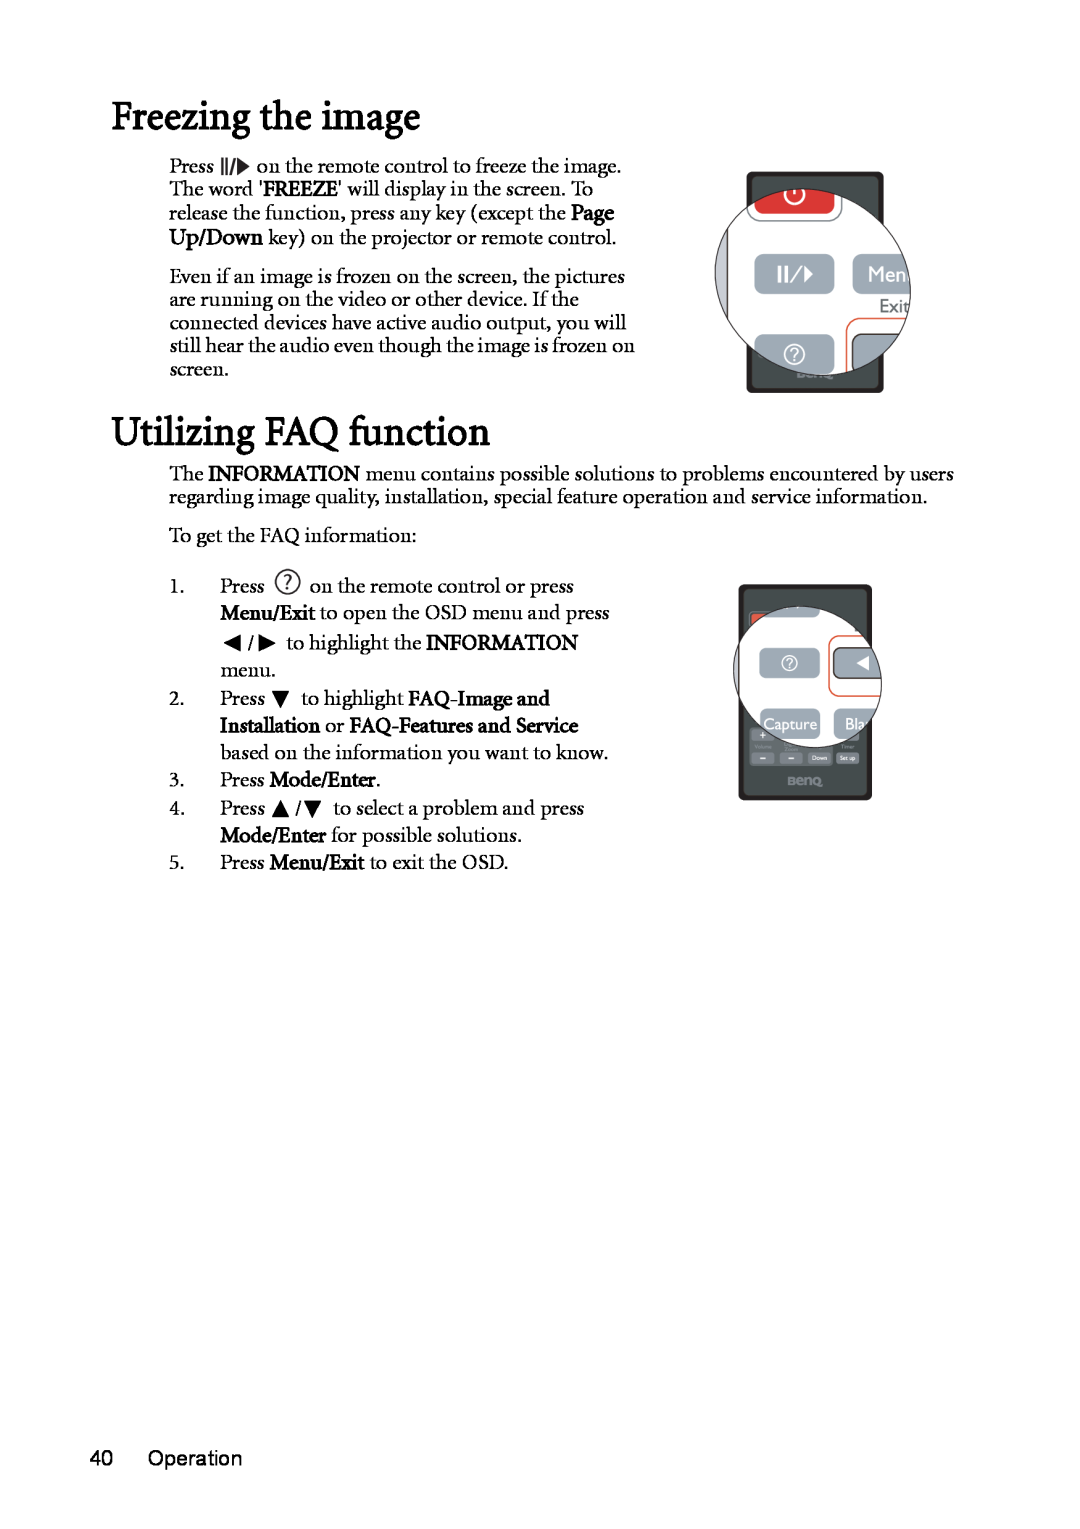 BenQ MX511 user manual Freezing the image, Utilizing FAQ function, to highlight the INFORMATION menu 